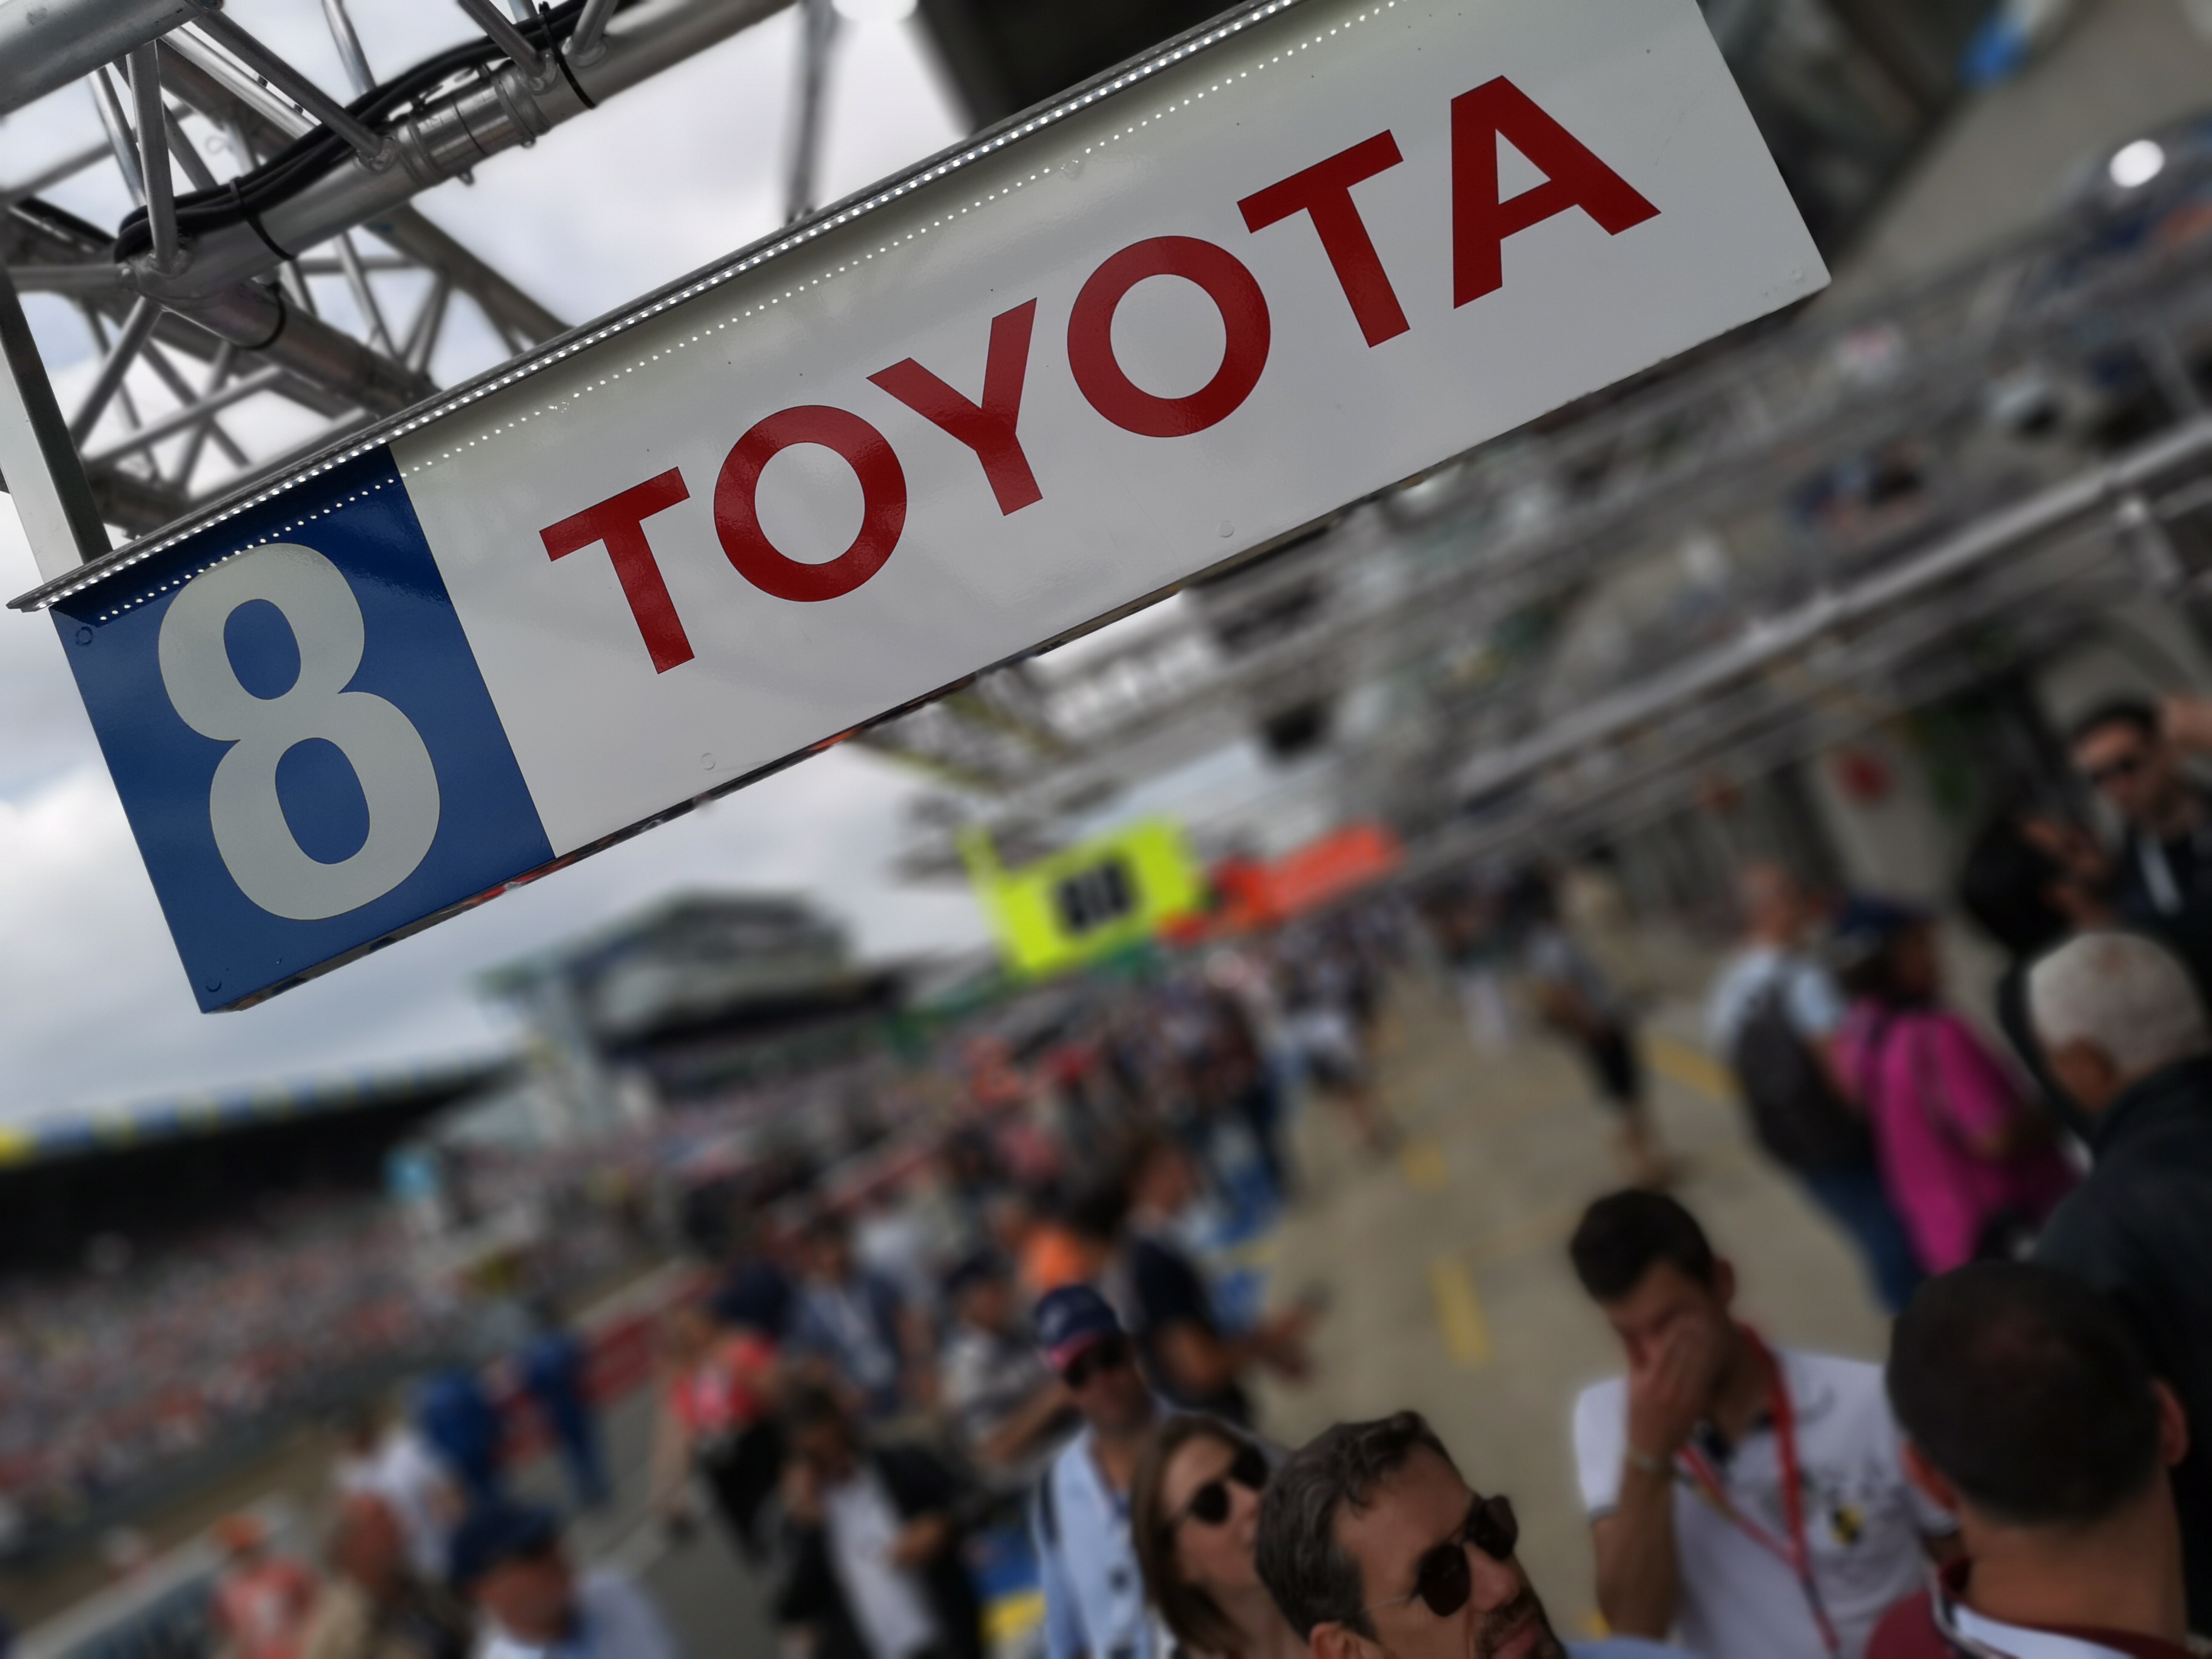 2018 Le Mans 24 Hours - Atmosphere - Grid walk - pit lane - Toyota garage